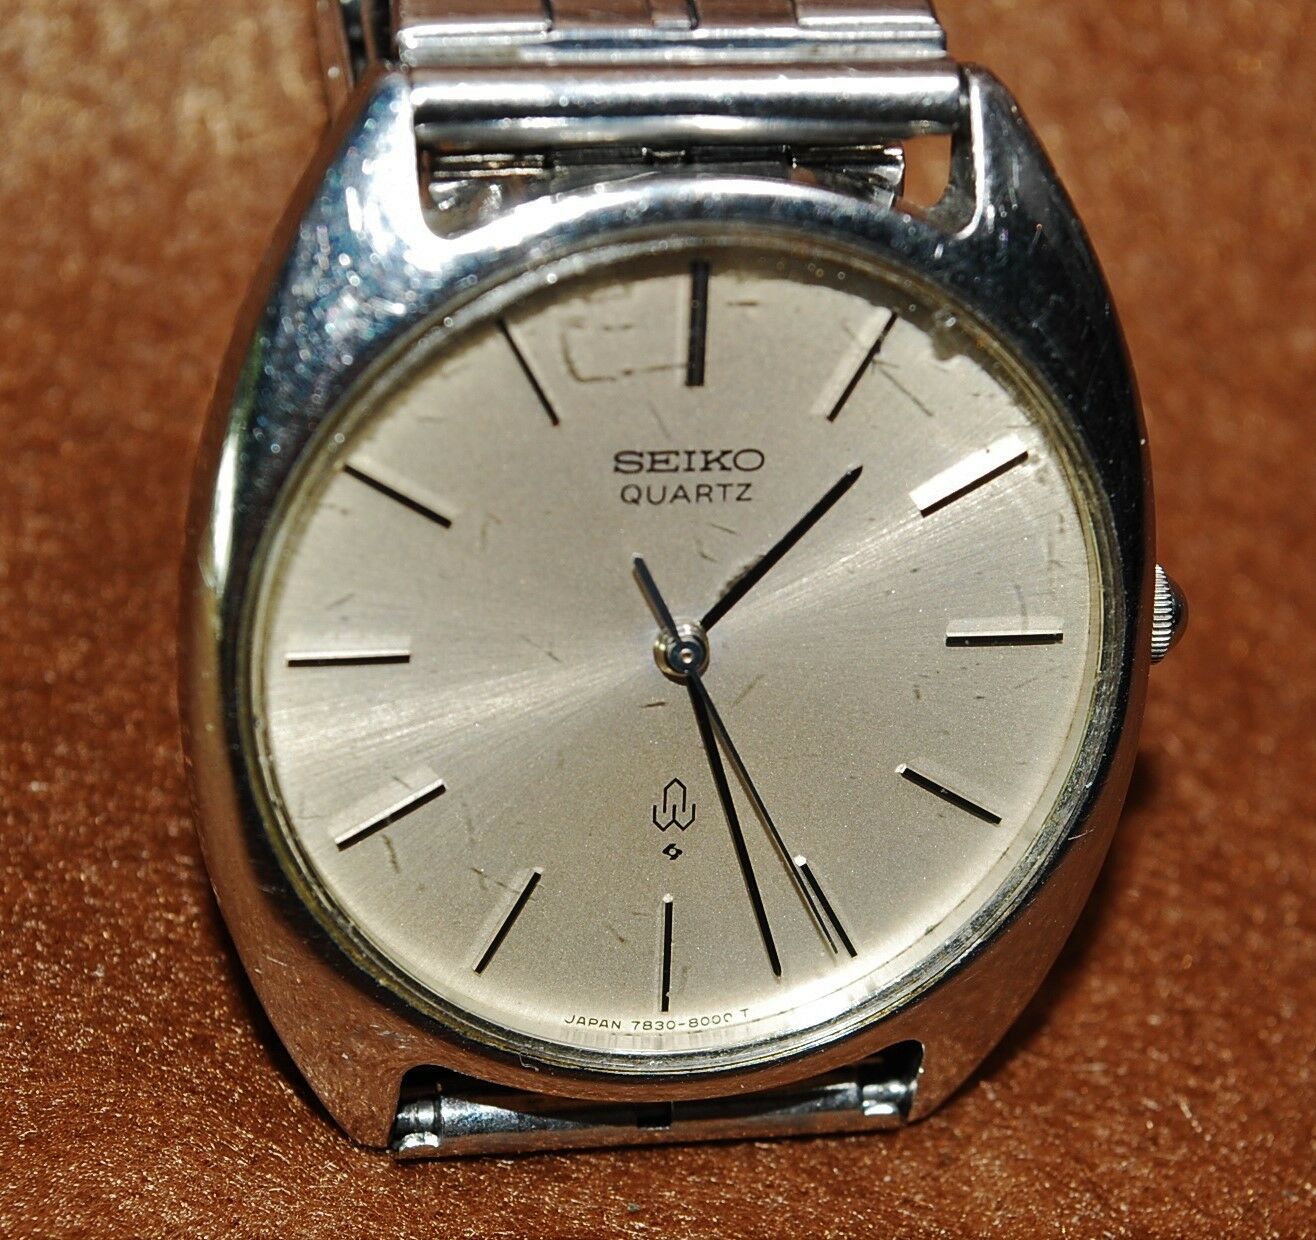 SEIKO QUARTZ Men's Watch 7830-8000 Working Silver from Japan 006 